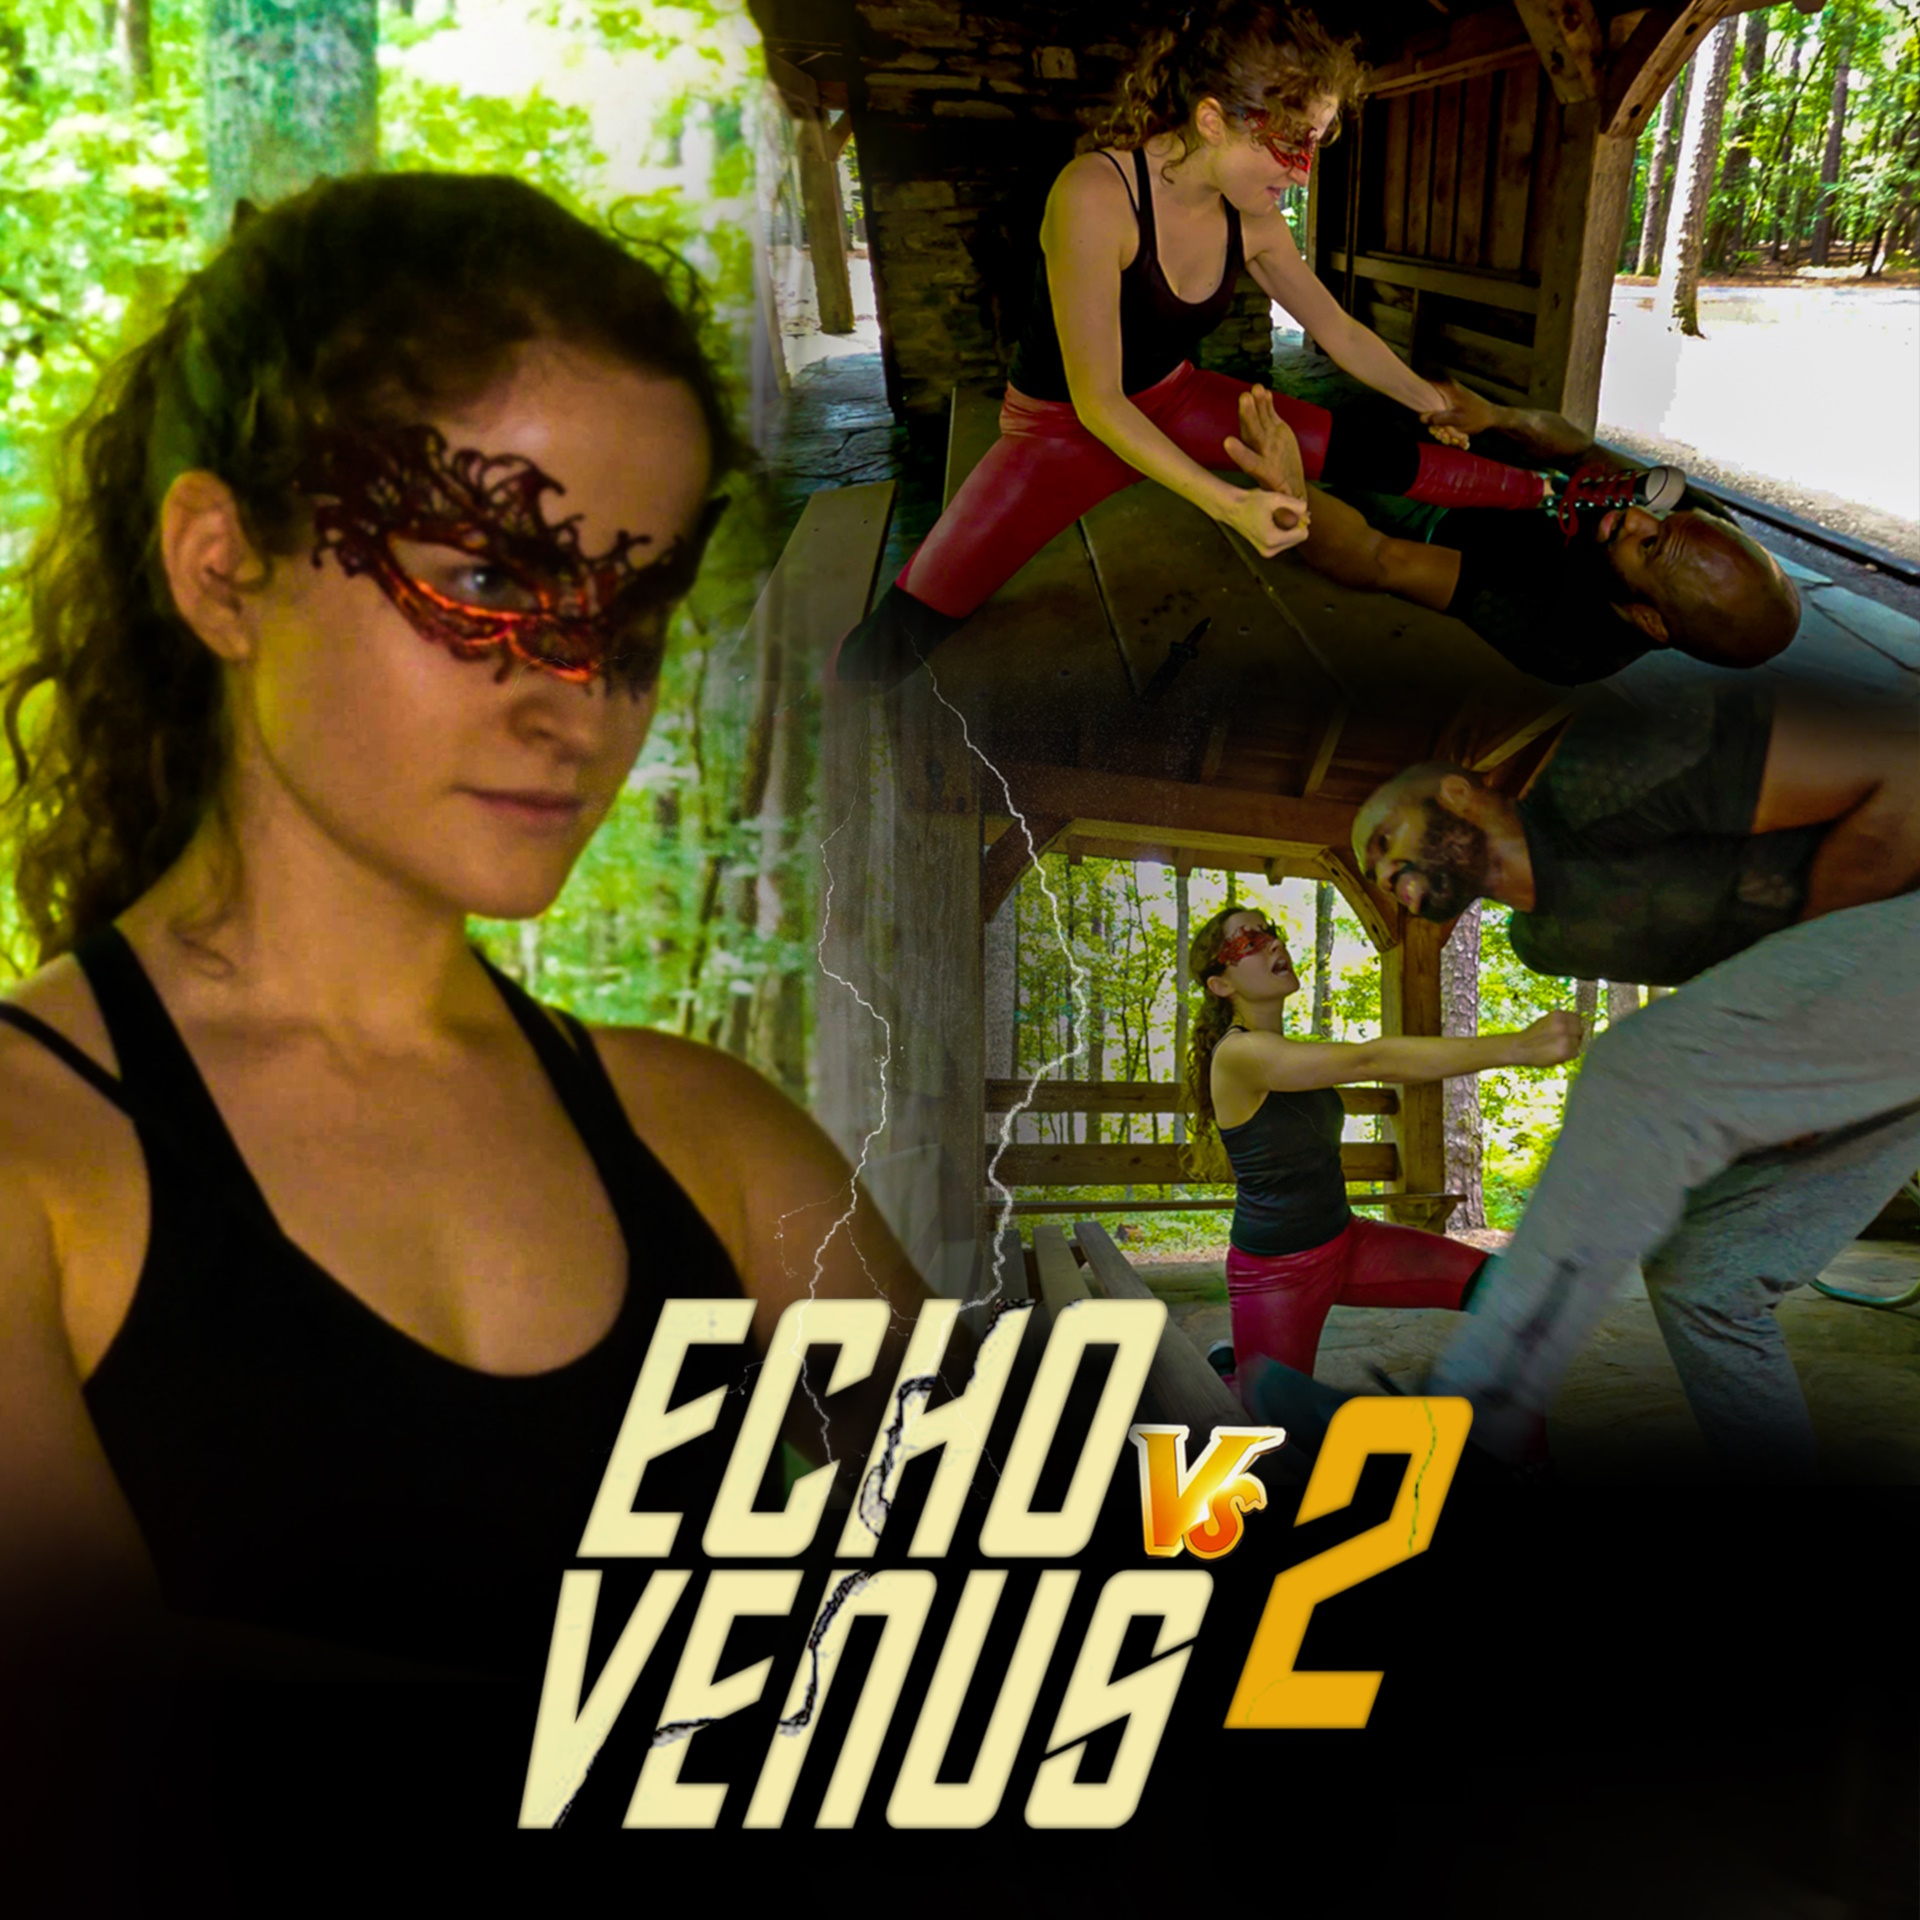 #3 - Echo vs. Venus 2: The Bounty